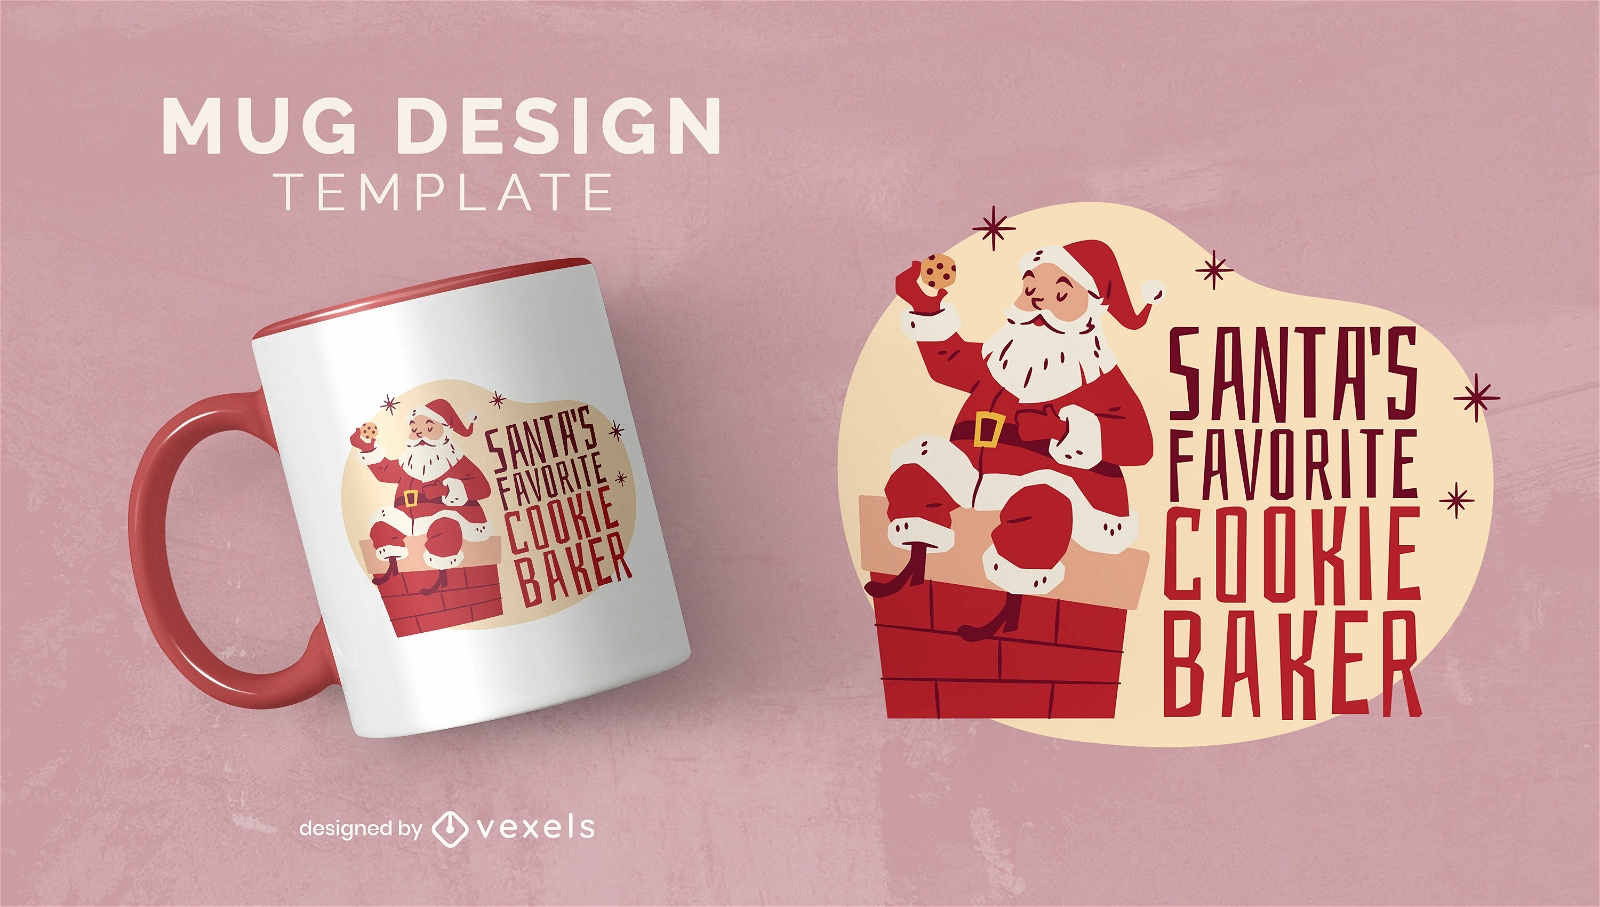 Santa's baker mug design